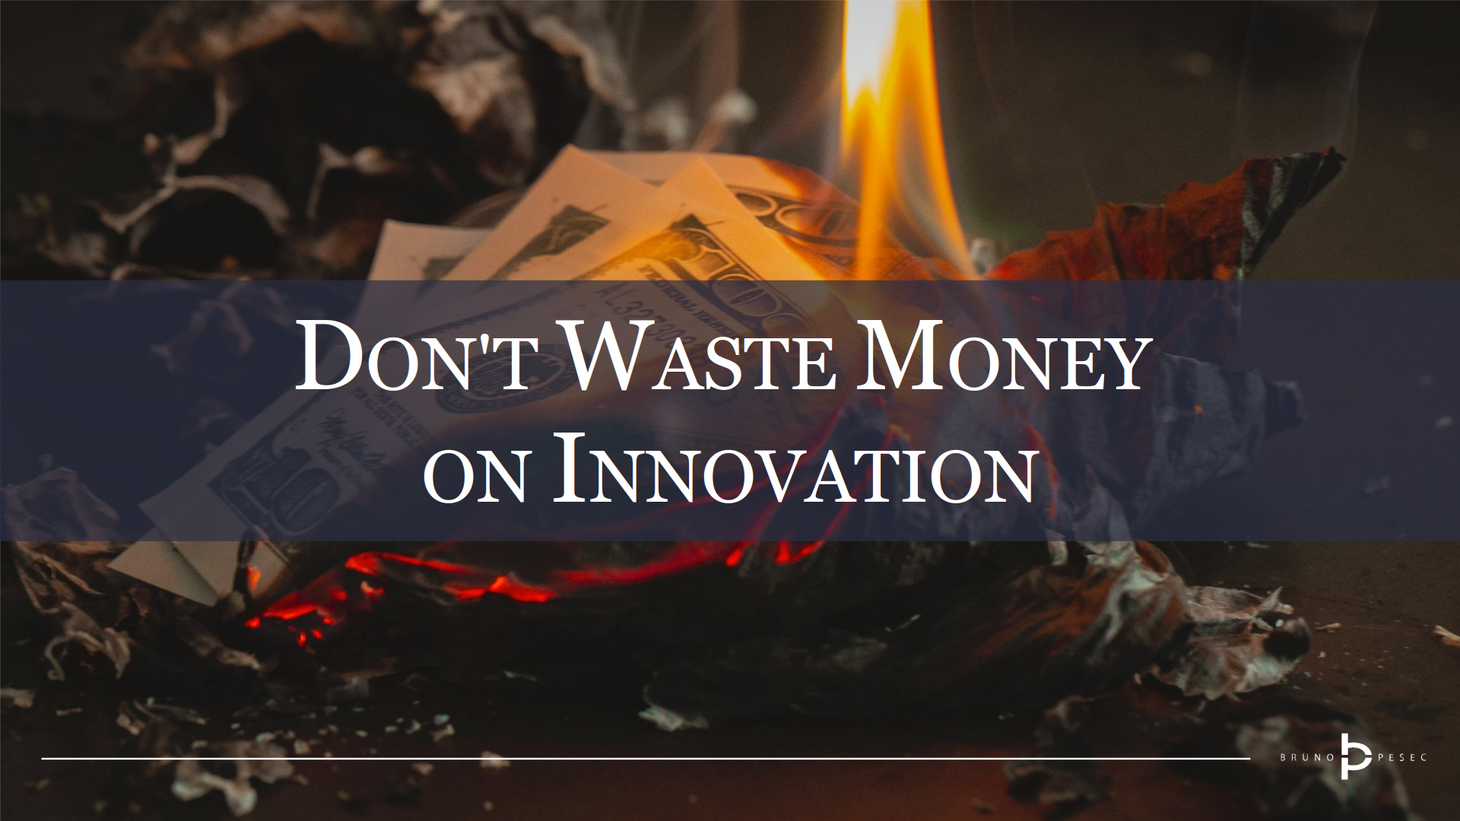 Don't waste money on innovation